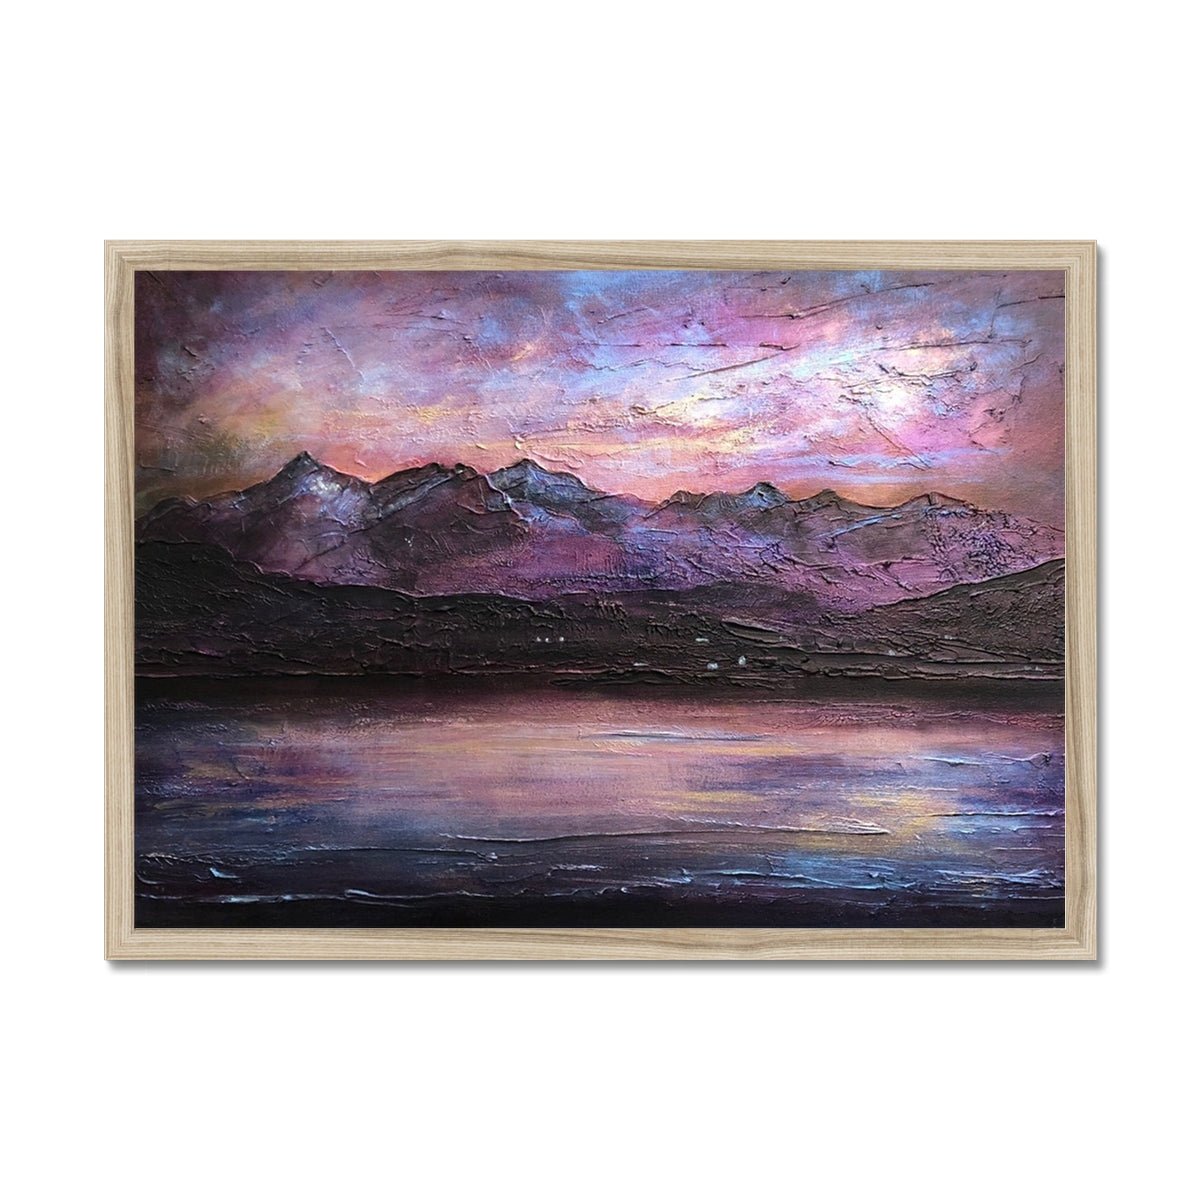 Last Skye Light Painting | Framed Prints From Scotland-Framed Prints-Skye Art Gallery-A2 Landscape-Natural Frame-Paintings, Prints, Homeware, Art Gifts From Scotland By Scottish Artist Kevin Hunter